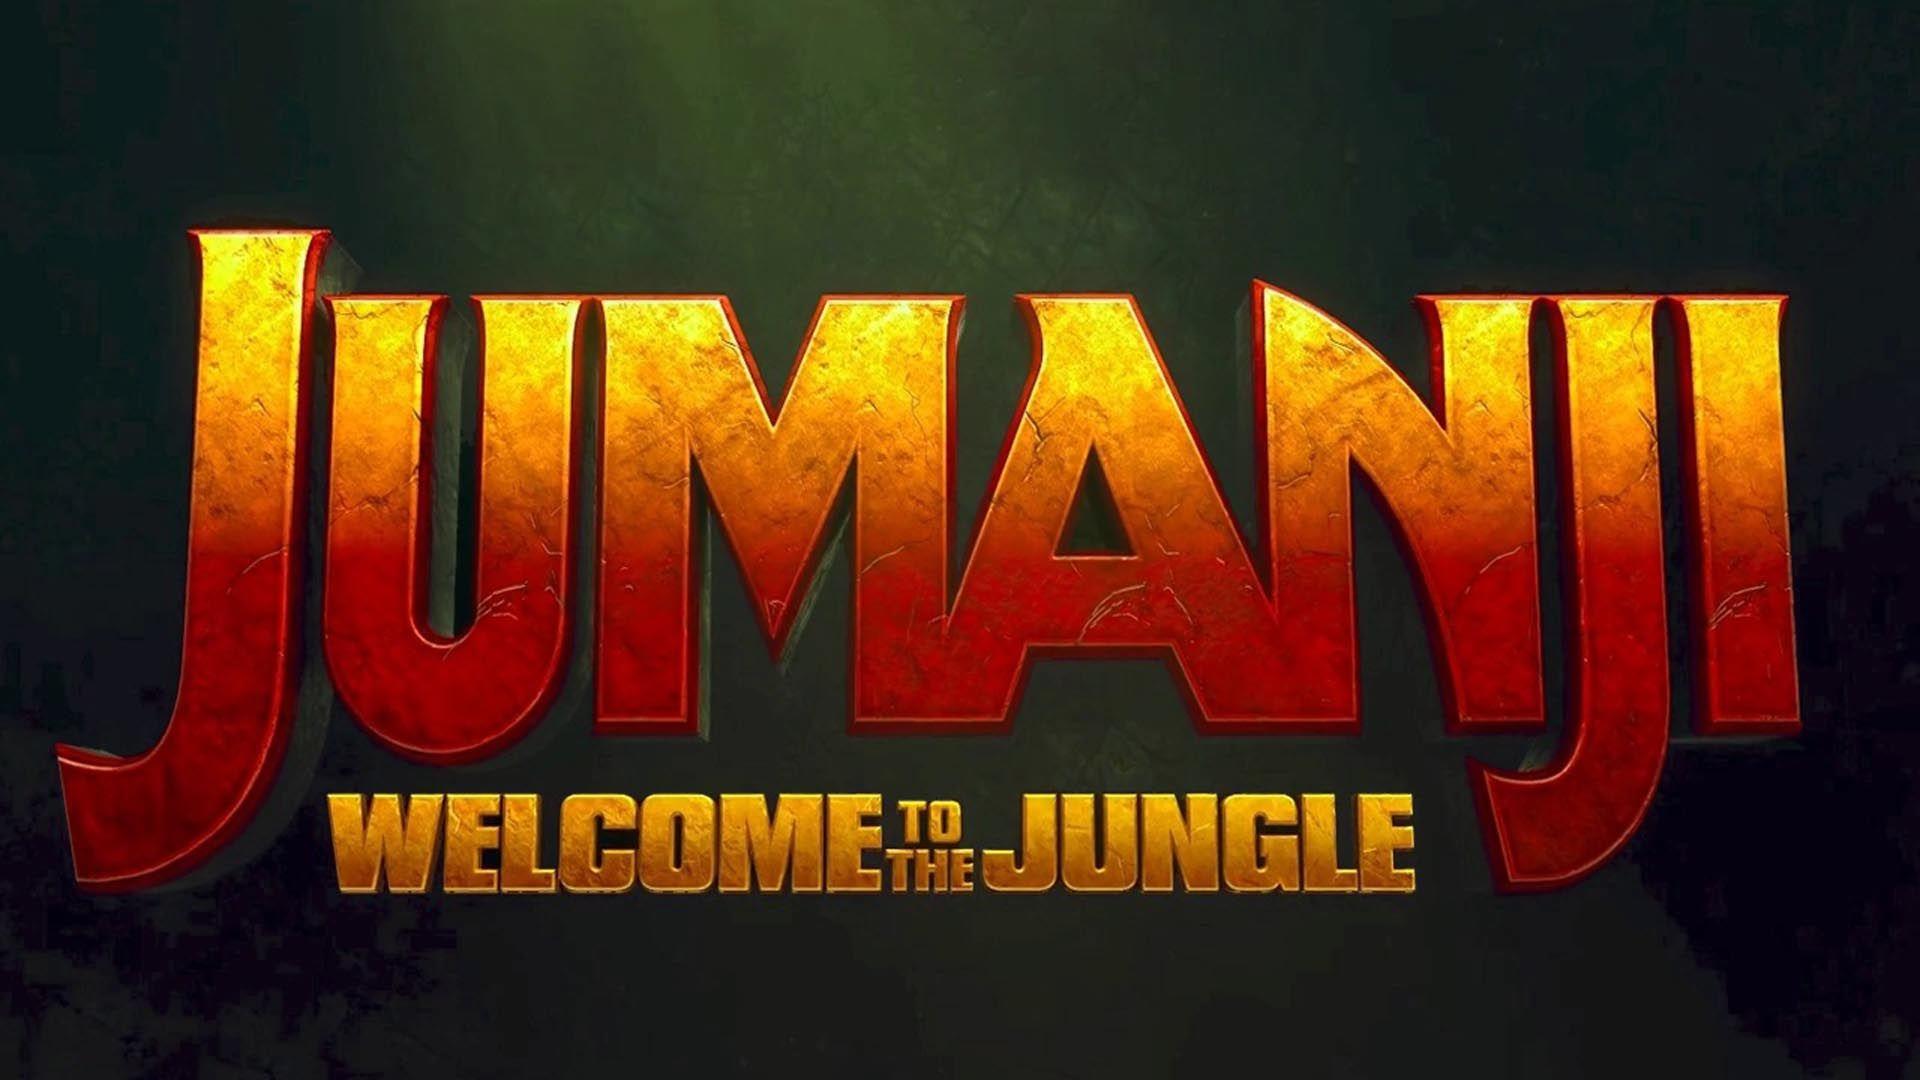 free downloads Jumanji: Welcome to the Jungle